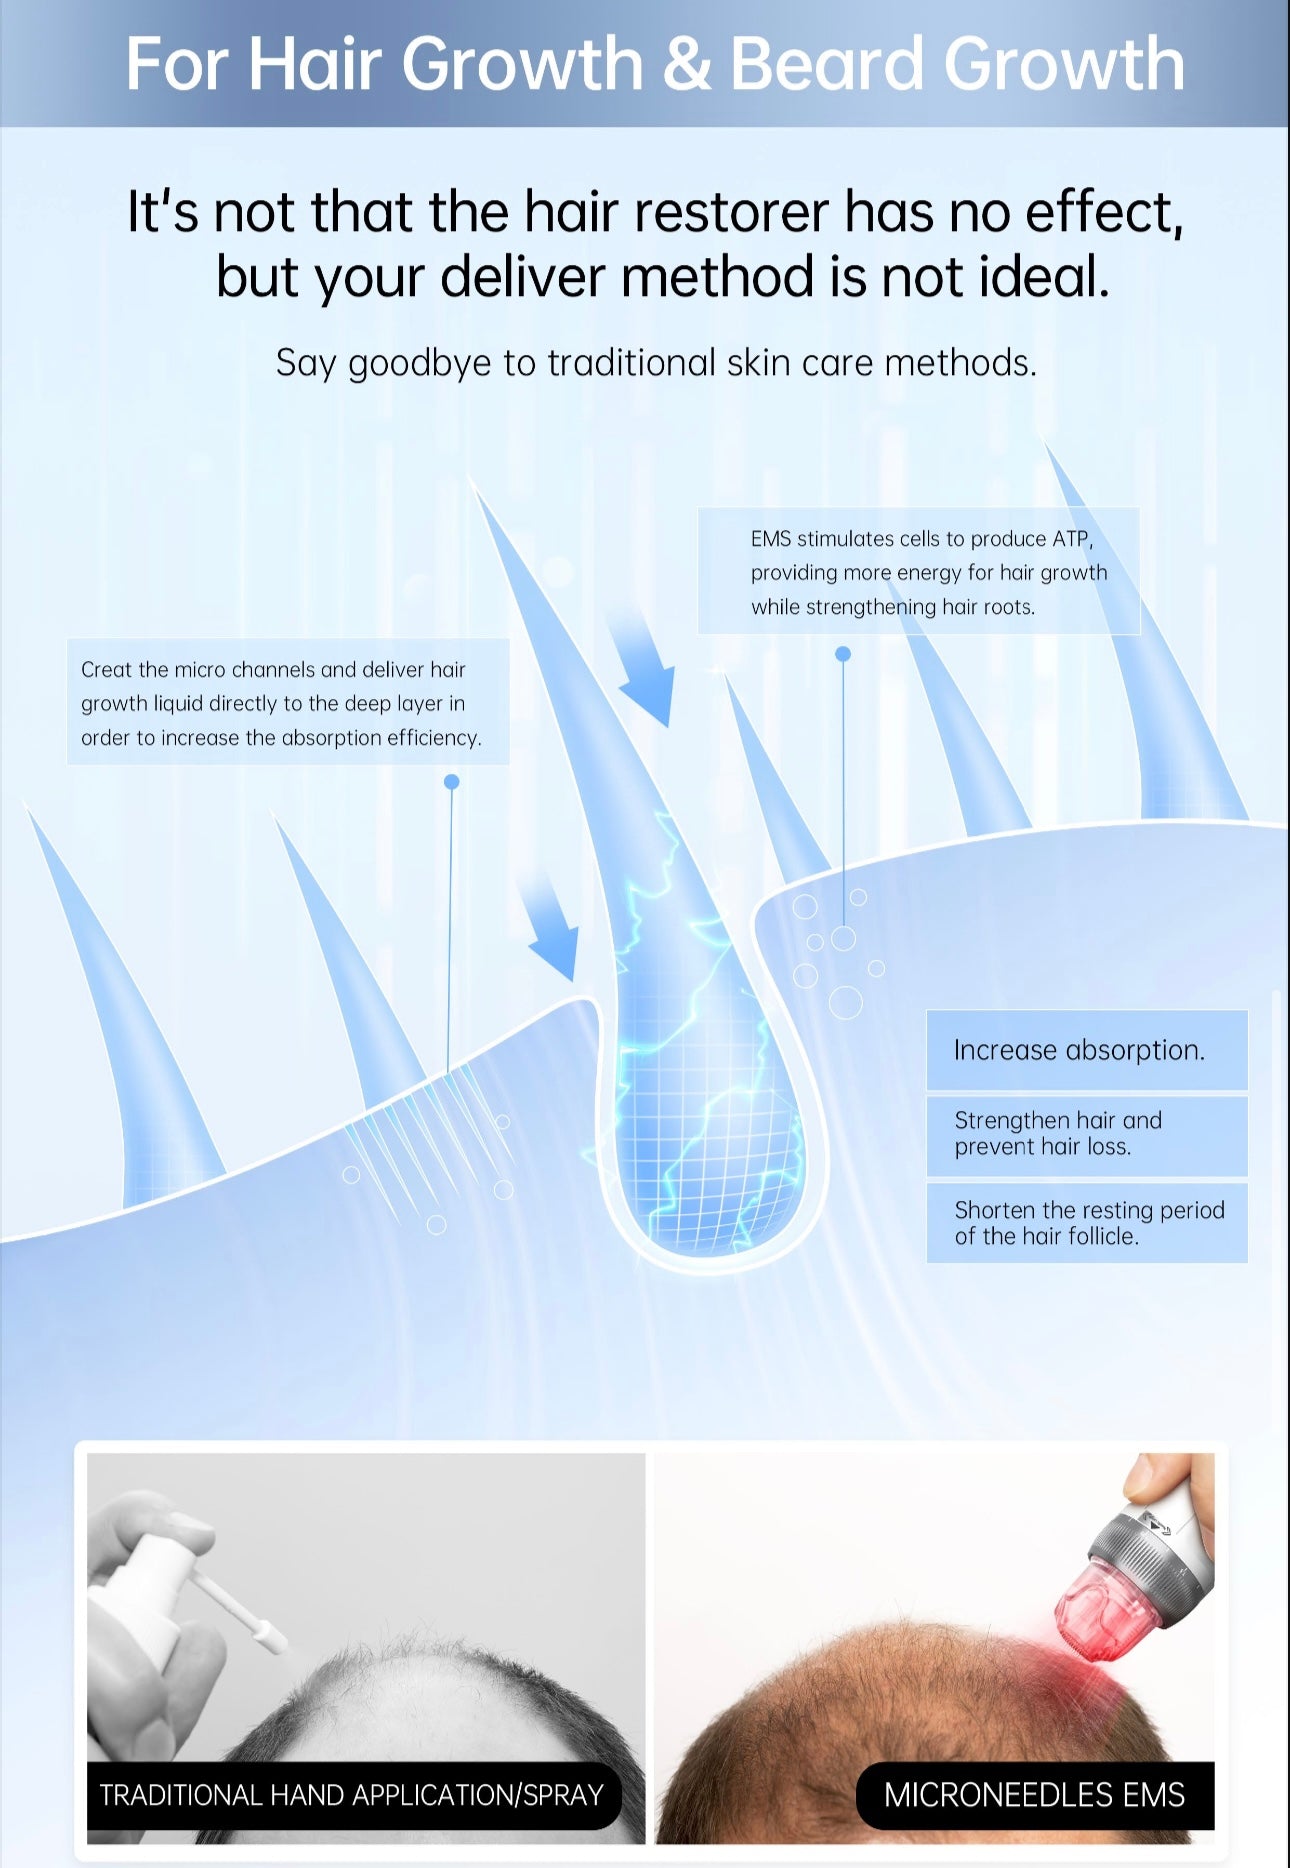 Bio pen Q2 Auto MTS Electroporation Microneedling EMS LED Triple effects Rejuvenate the skin2024